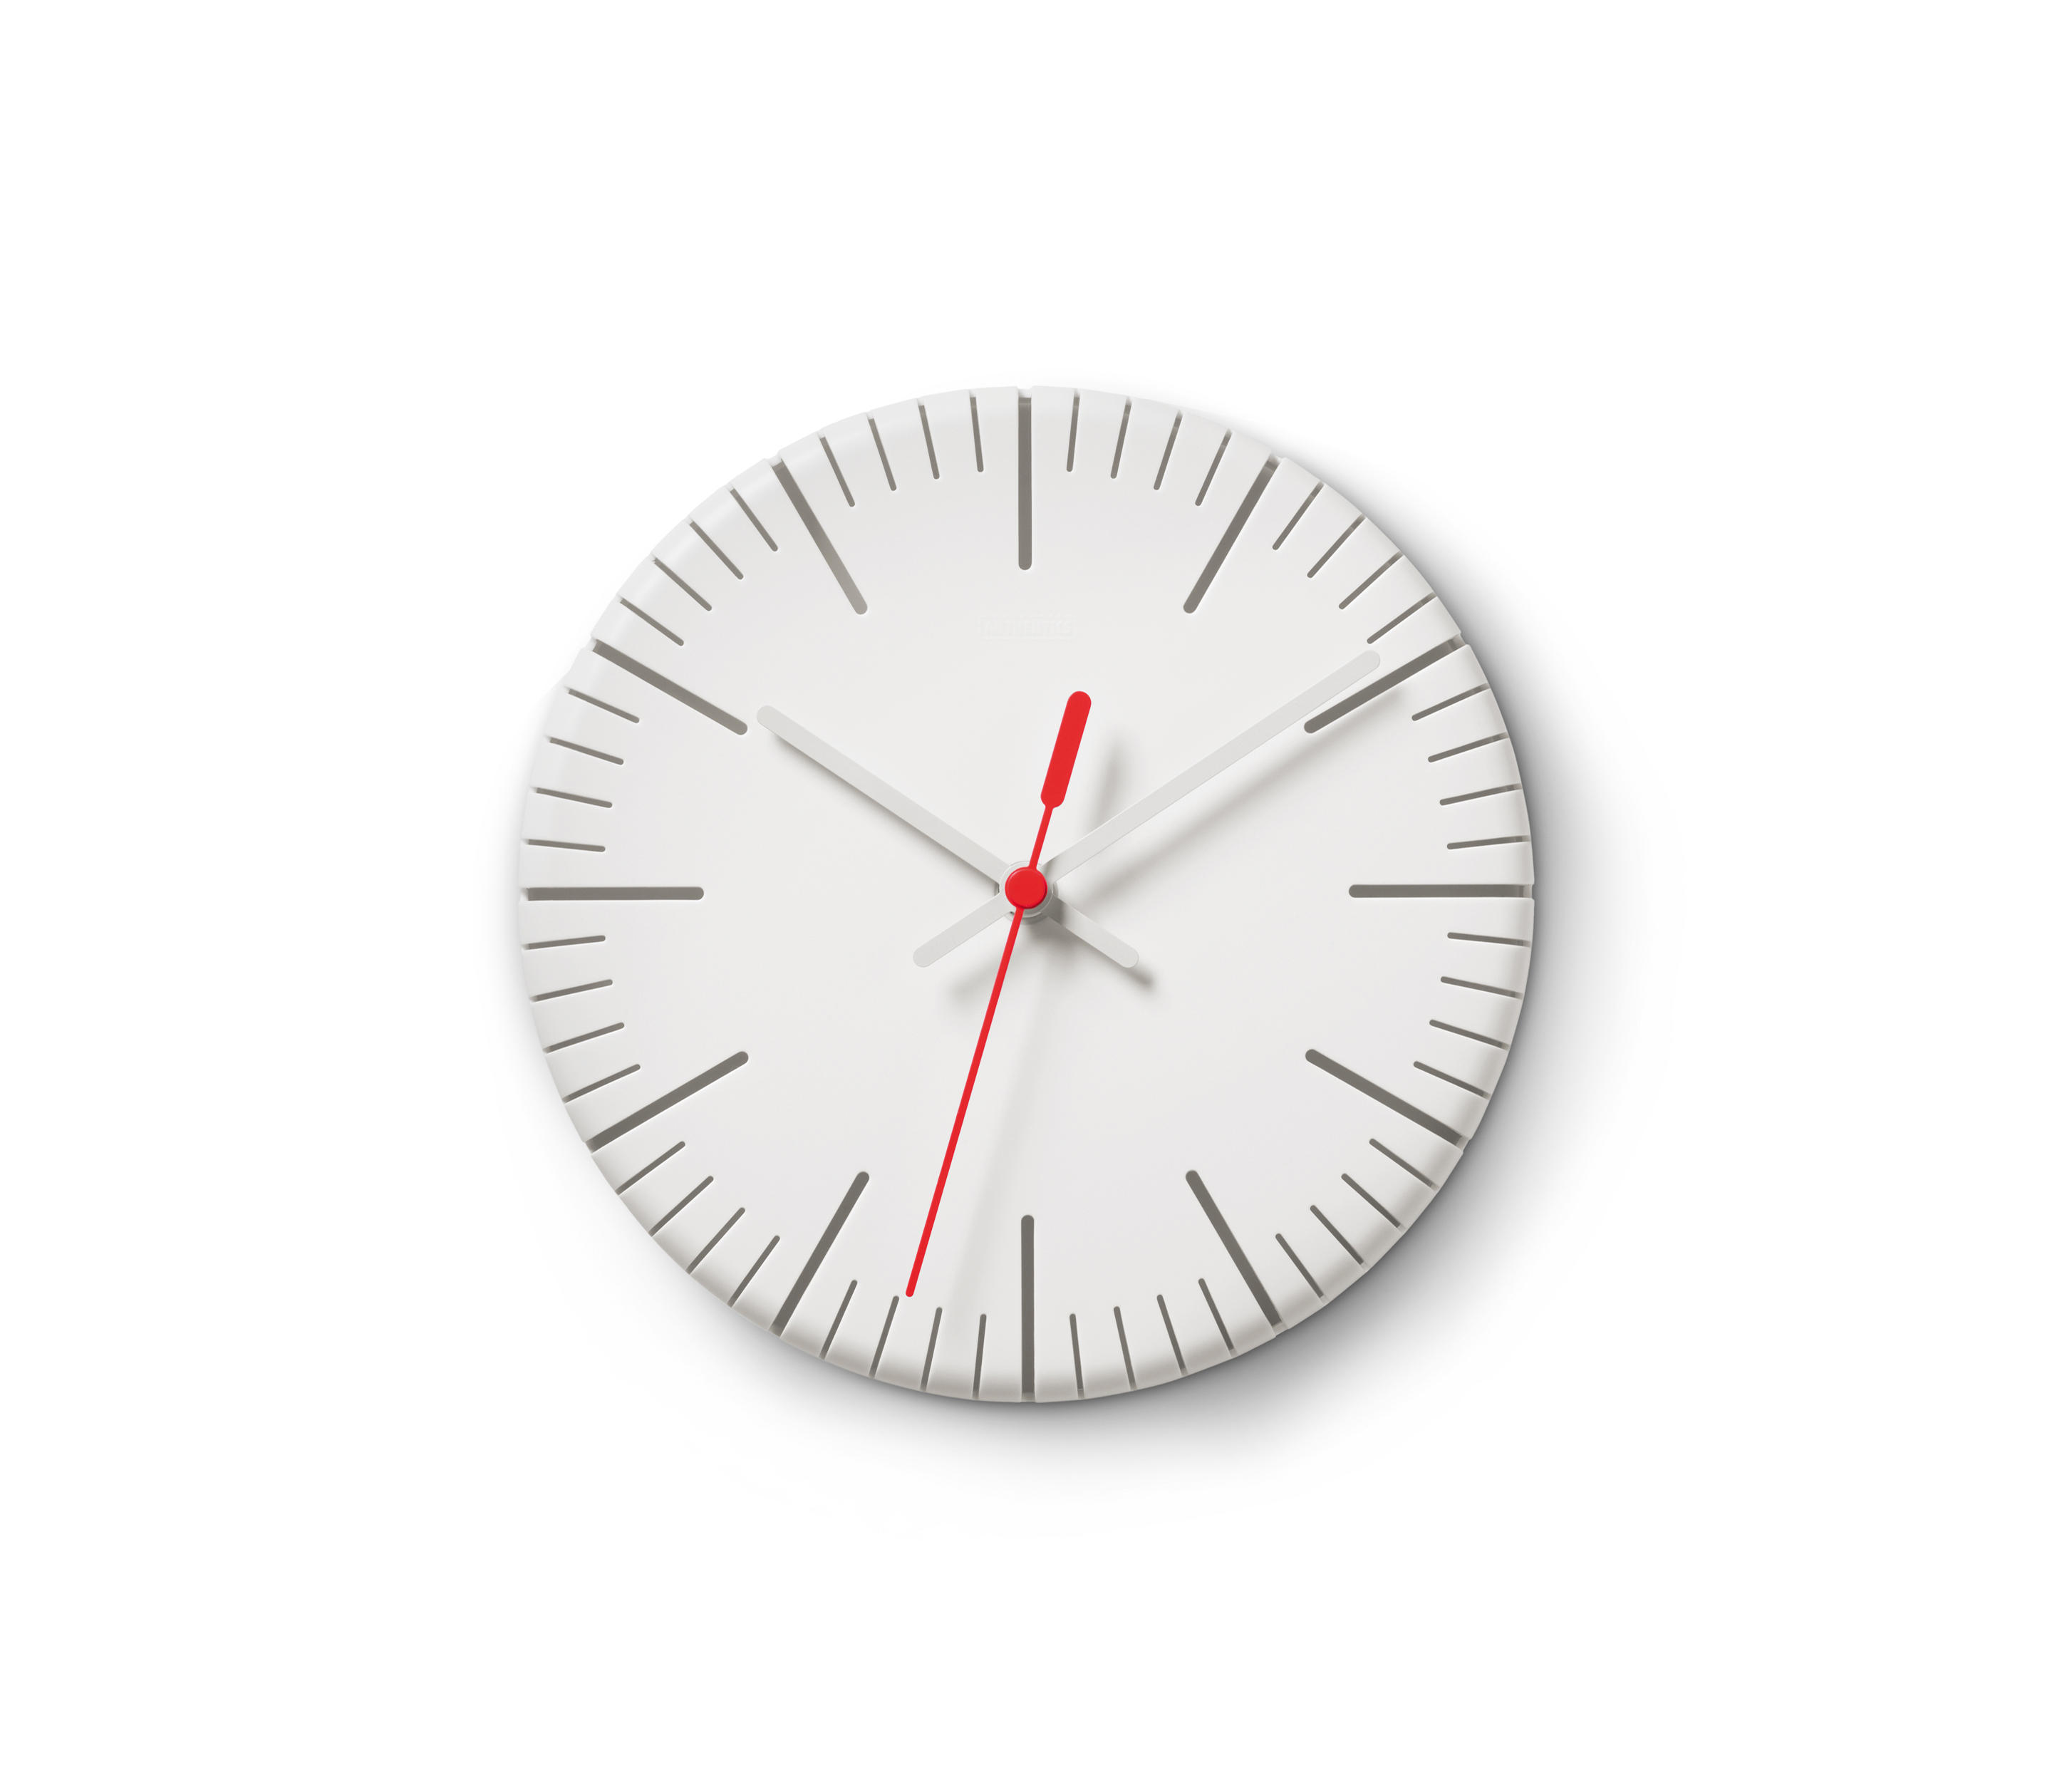 SPLIT TIME - Clocks from Authentics